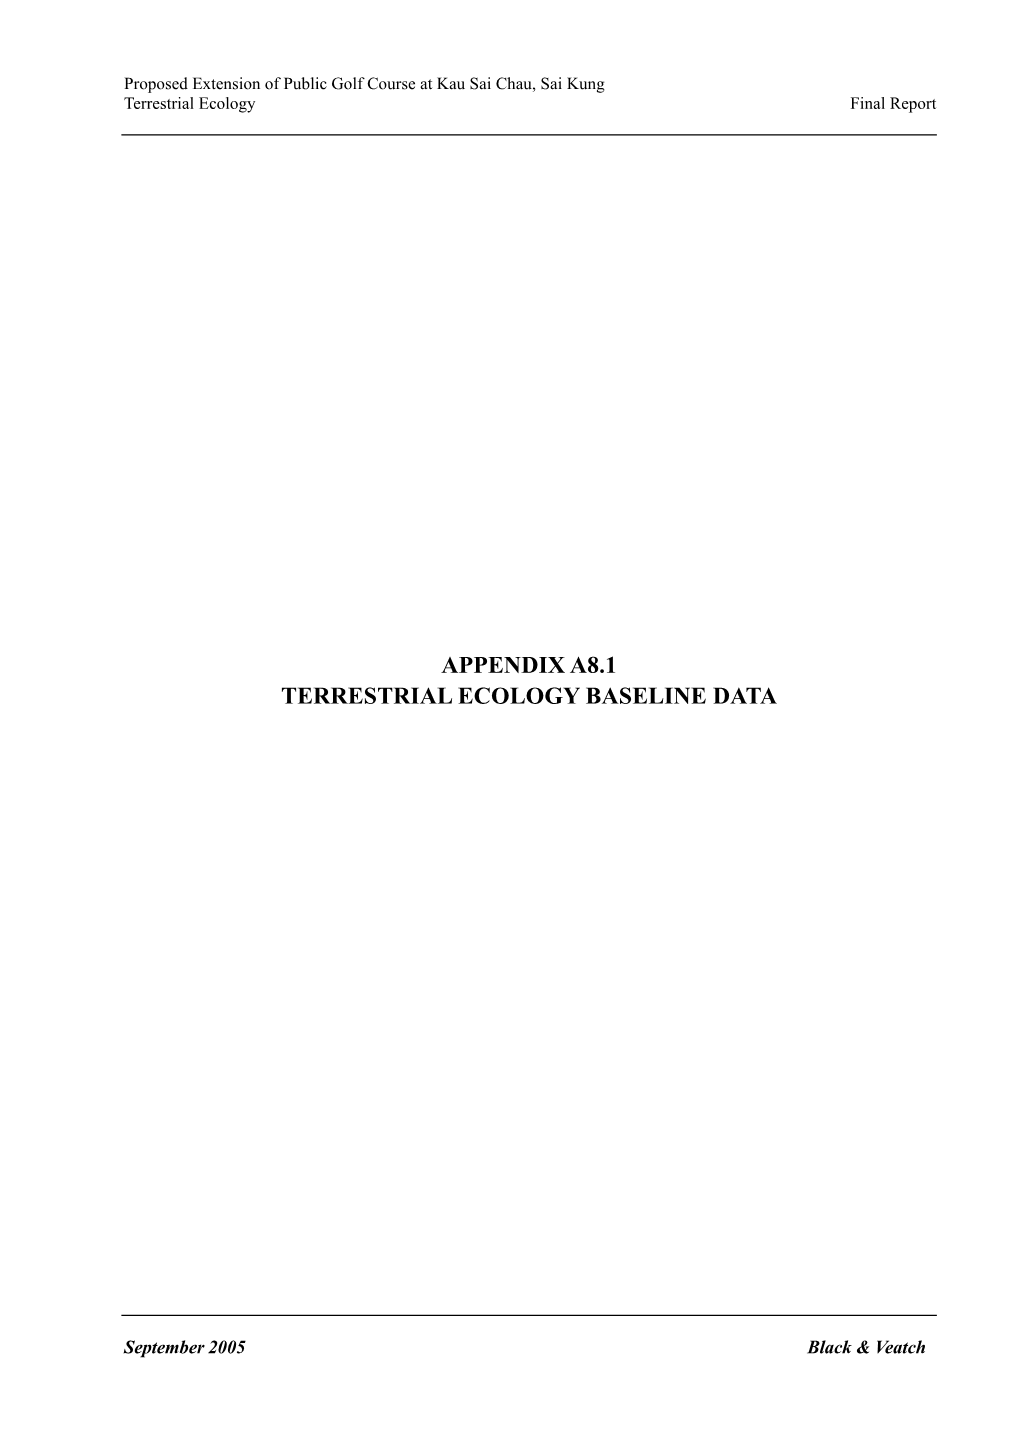 Appendix A8.1 Terrestrial Ecology Baseline Data